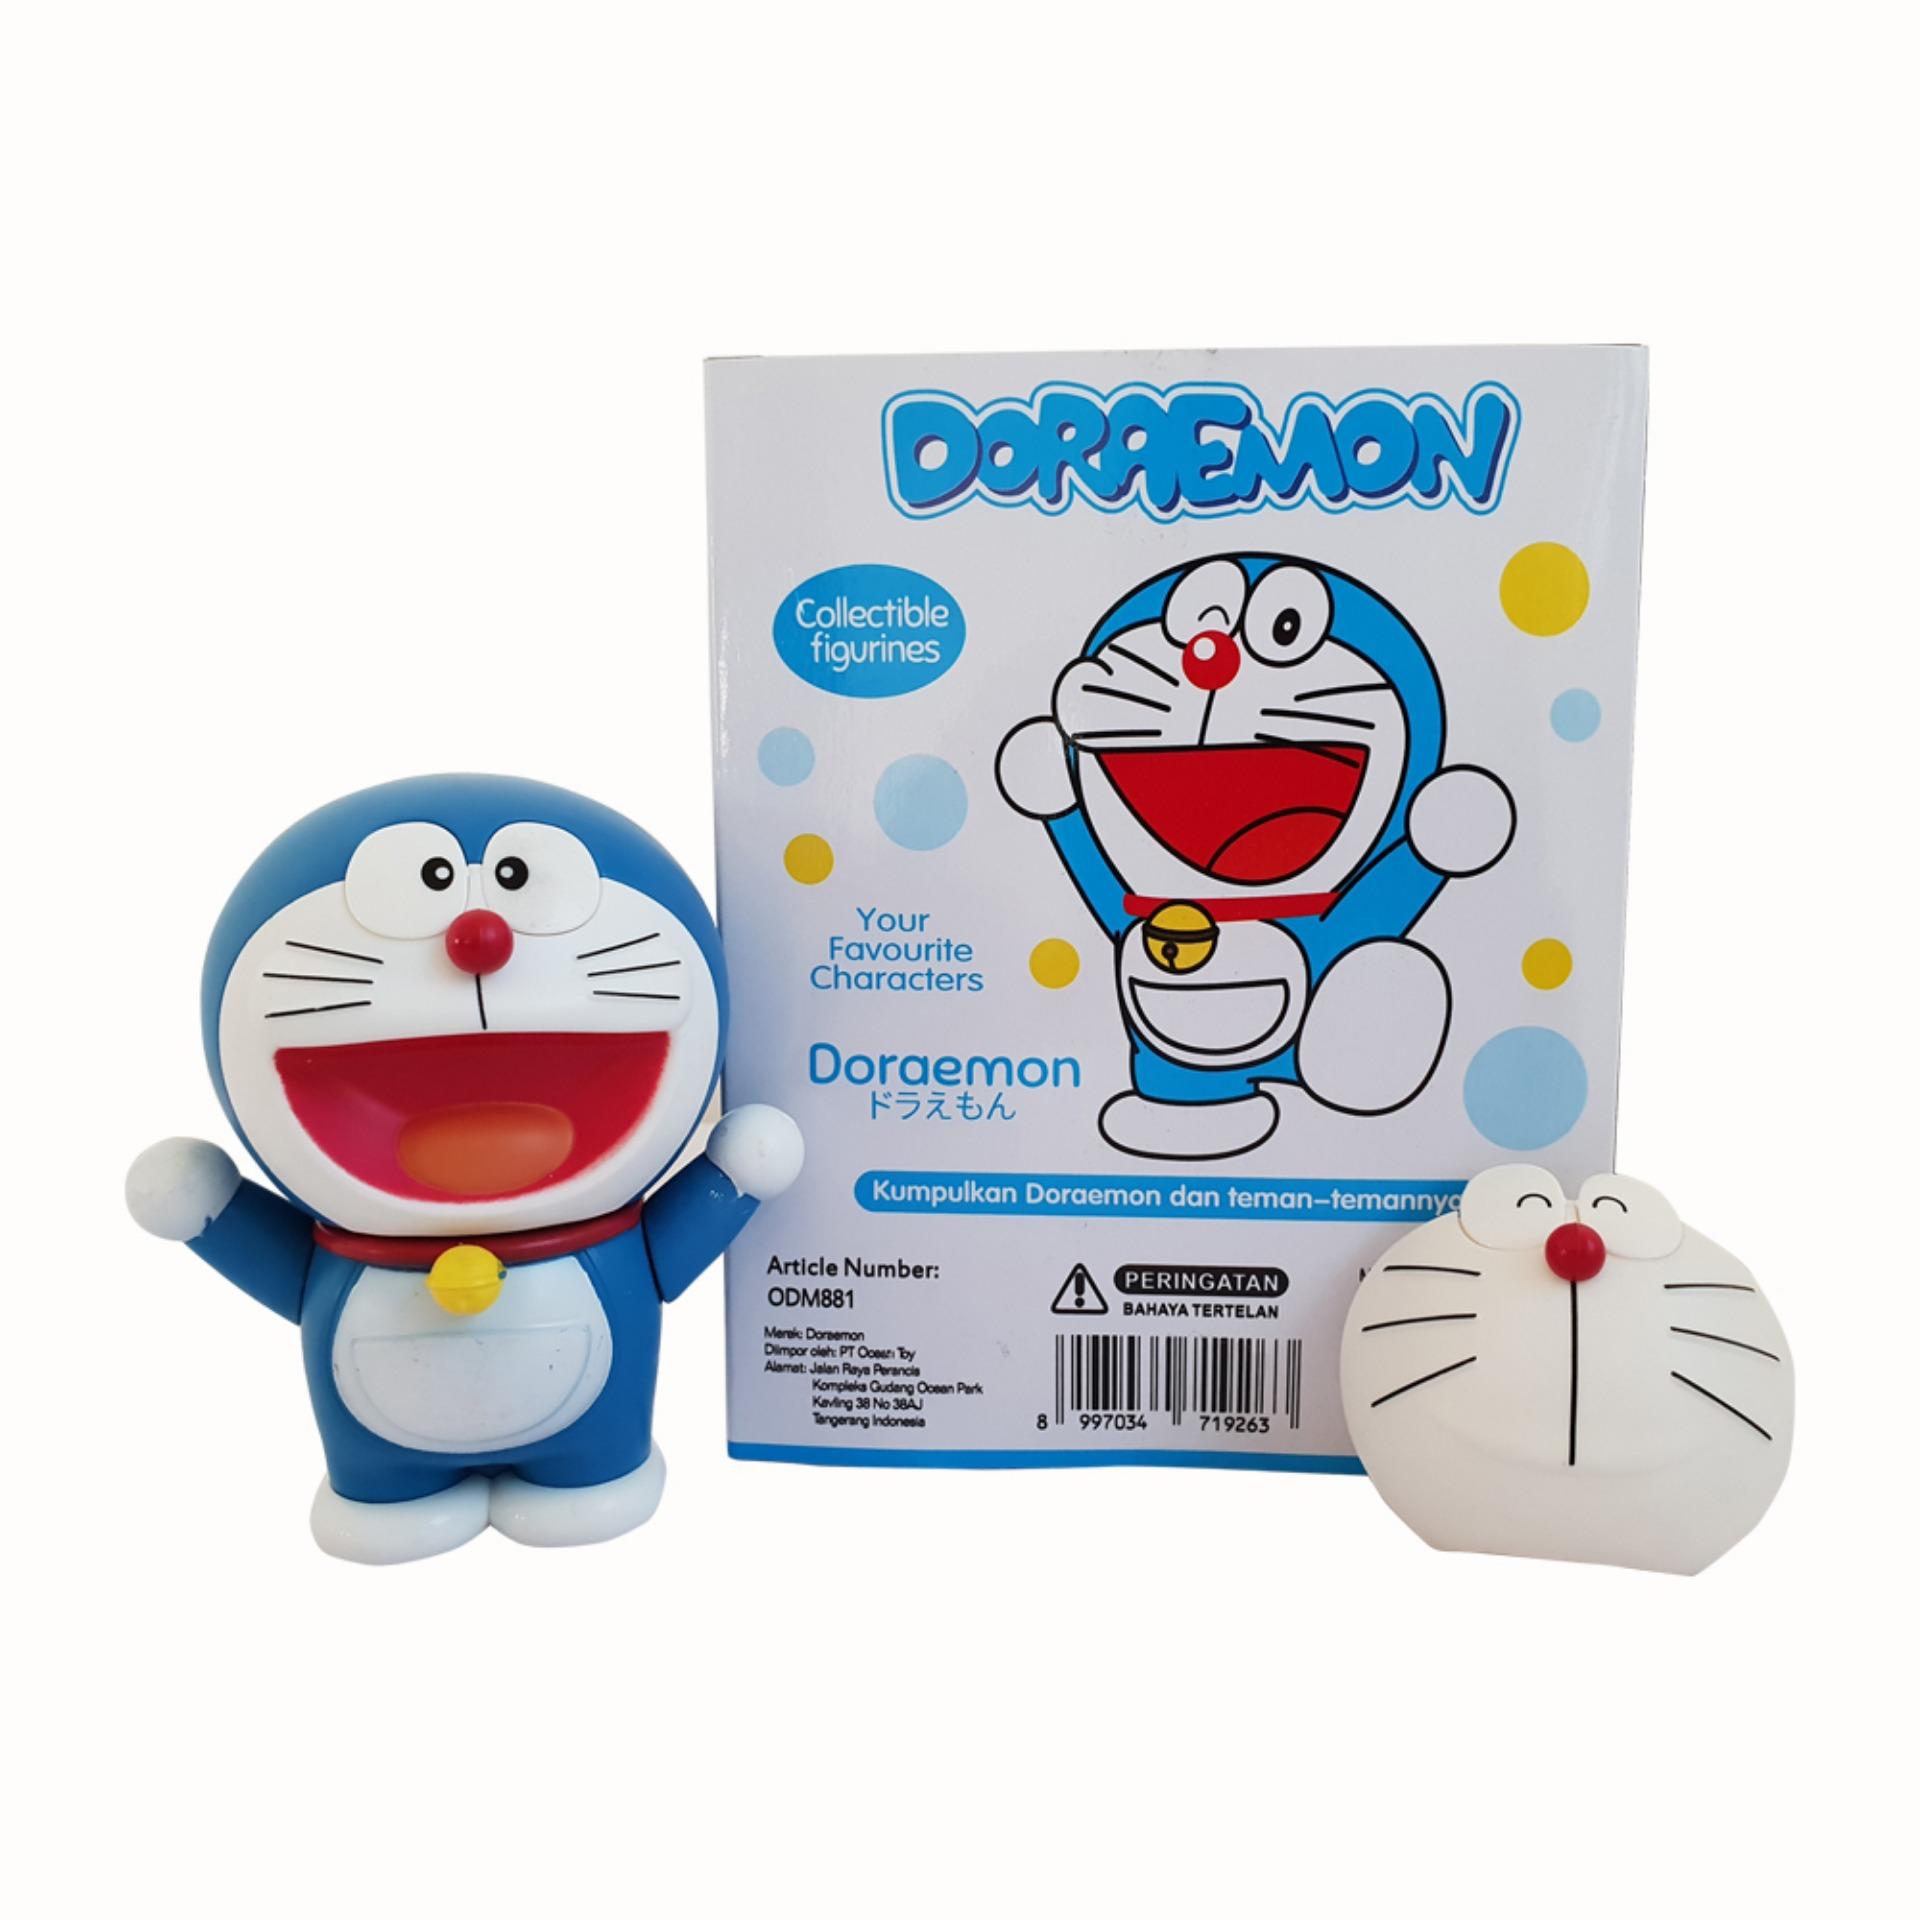 26 Gambar Ilustrasi Kartun Doraemon Beserta Ceritanya 